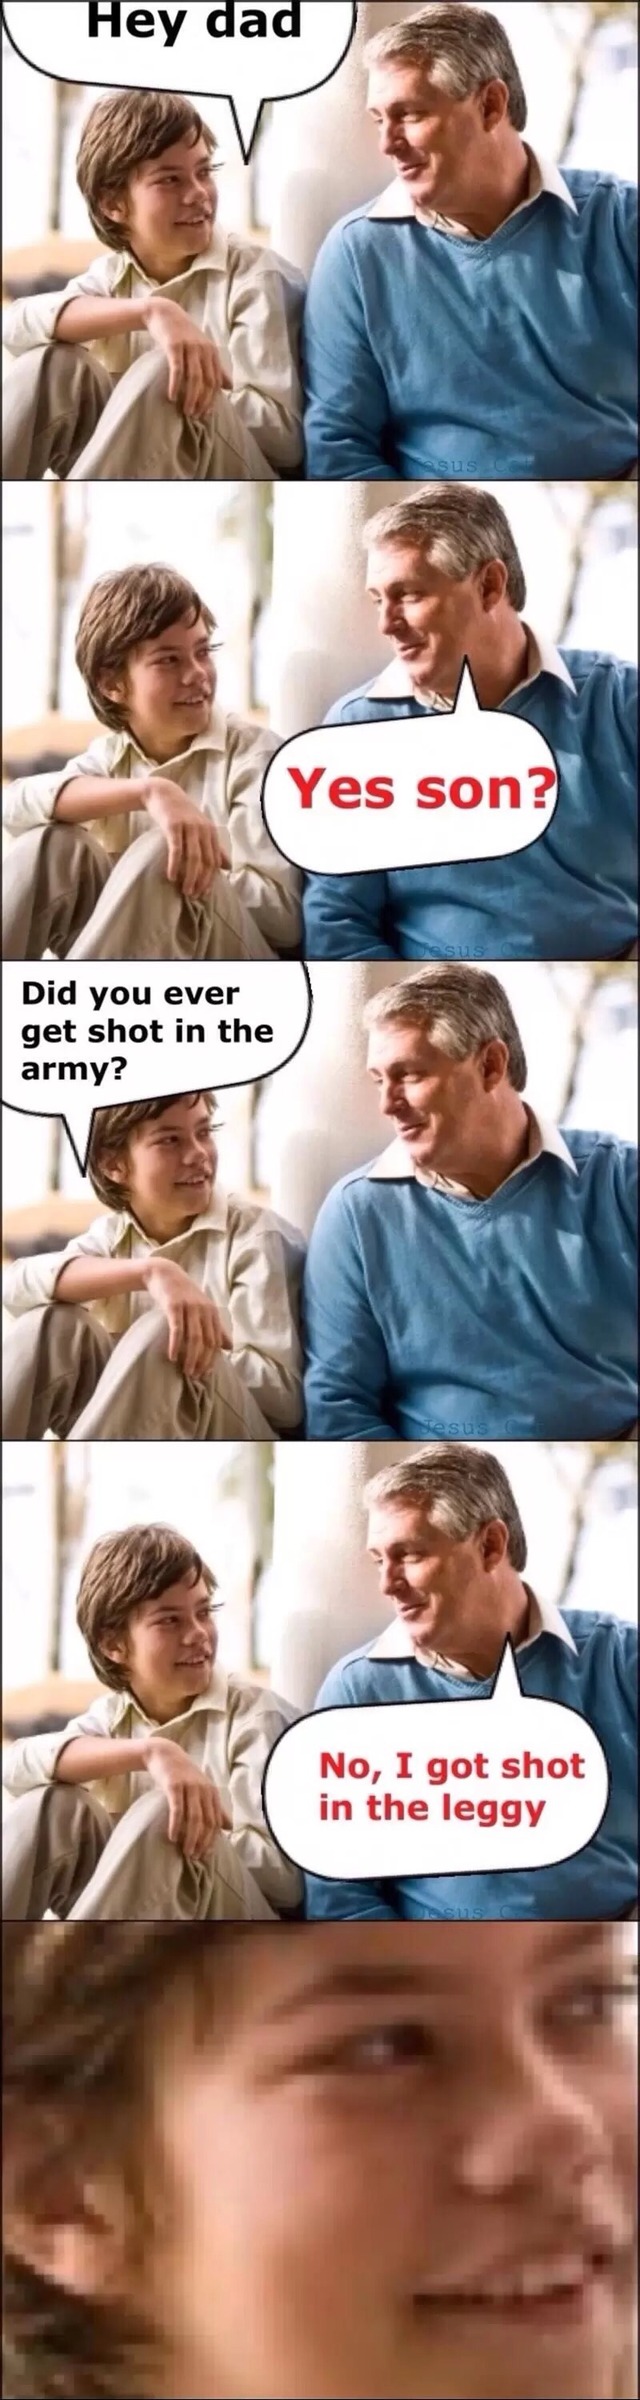 Army dad jokes - meme